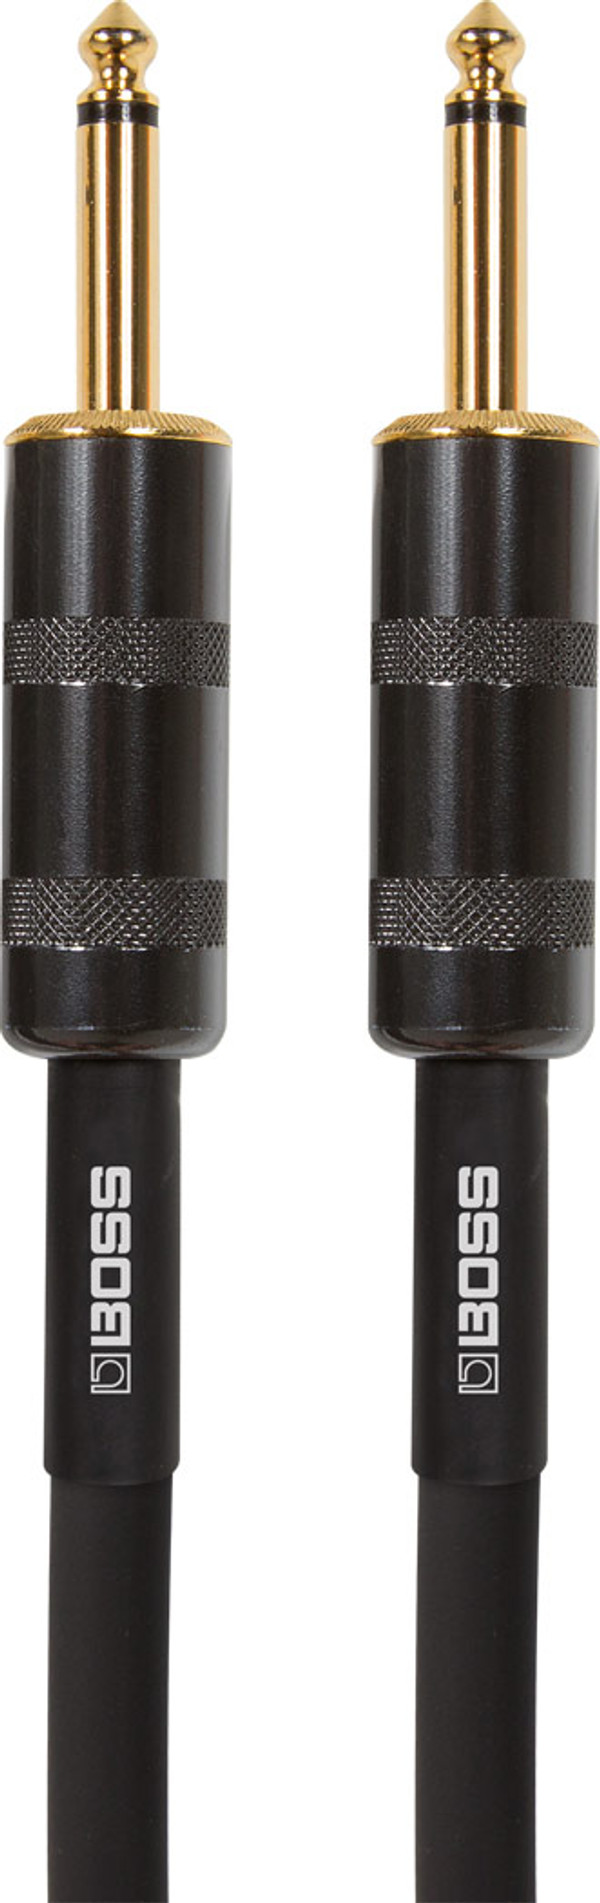 BSC-3 Speaker Cable, 3ft - 14 Gauge